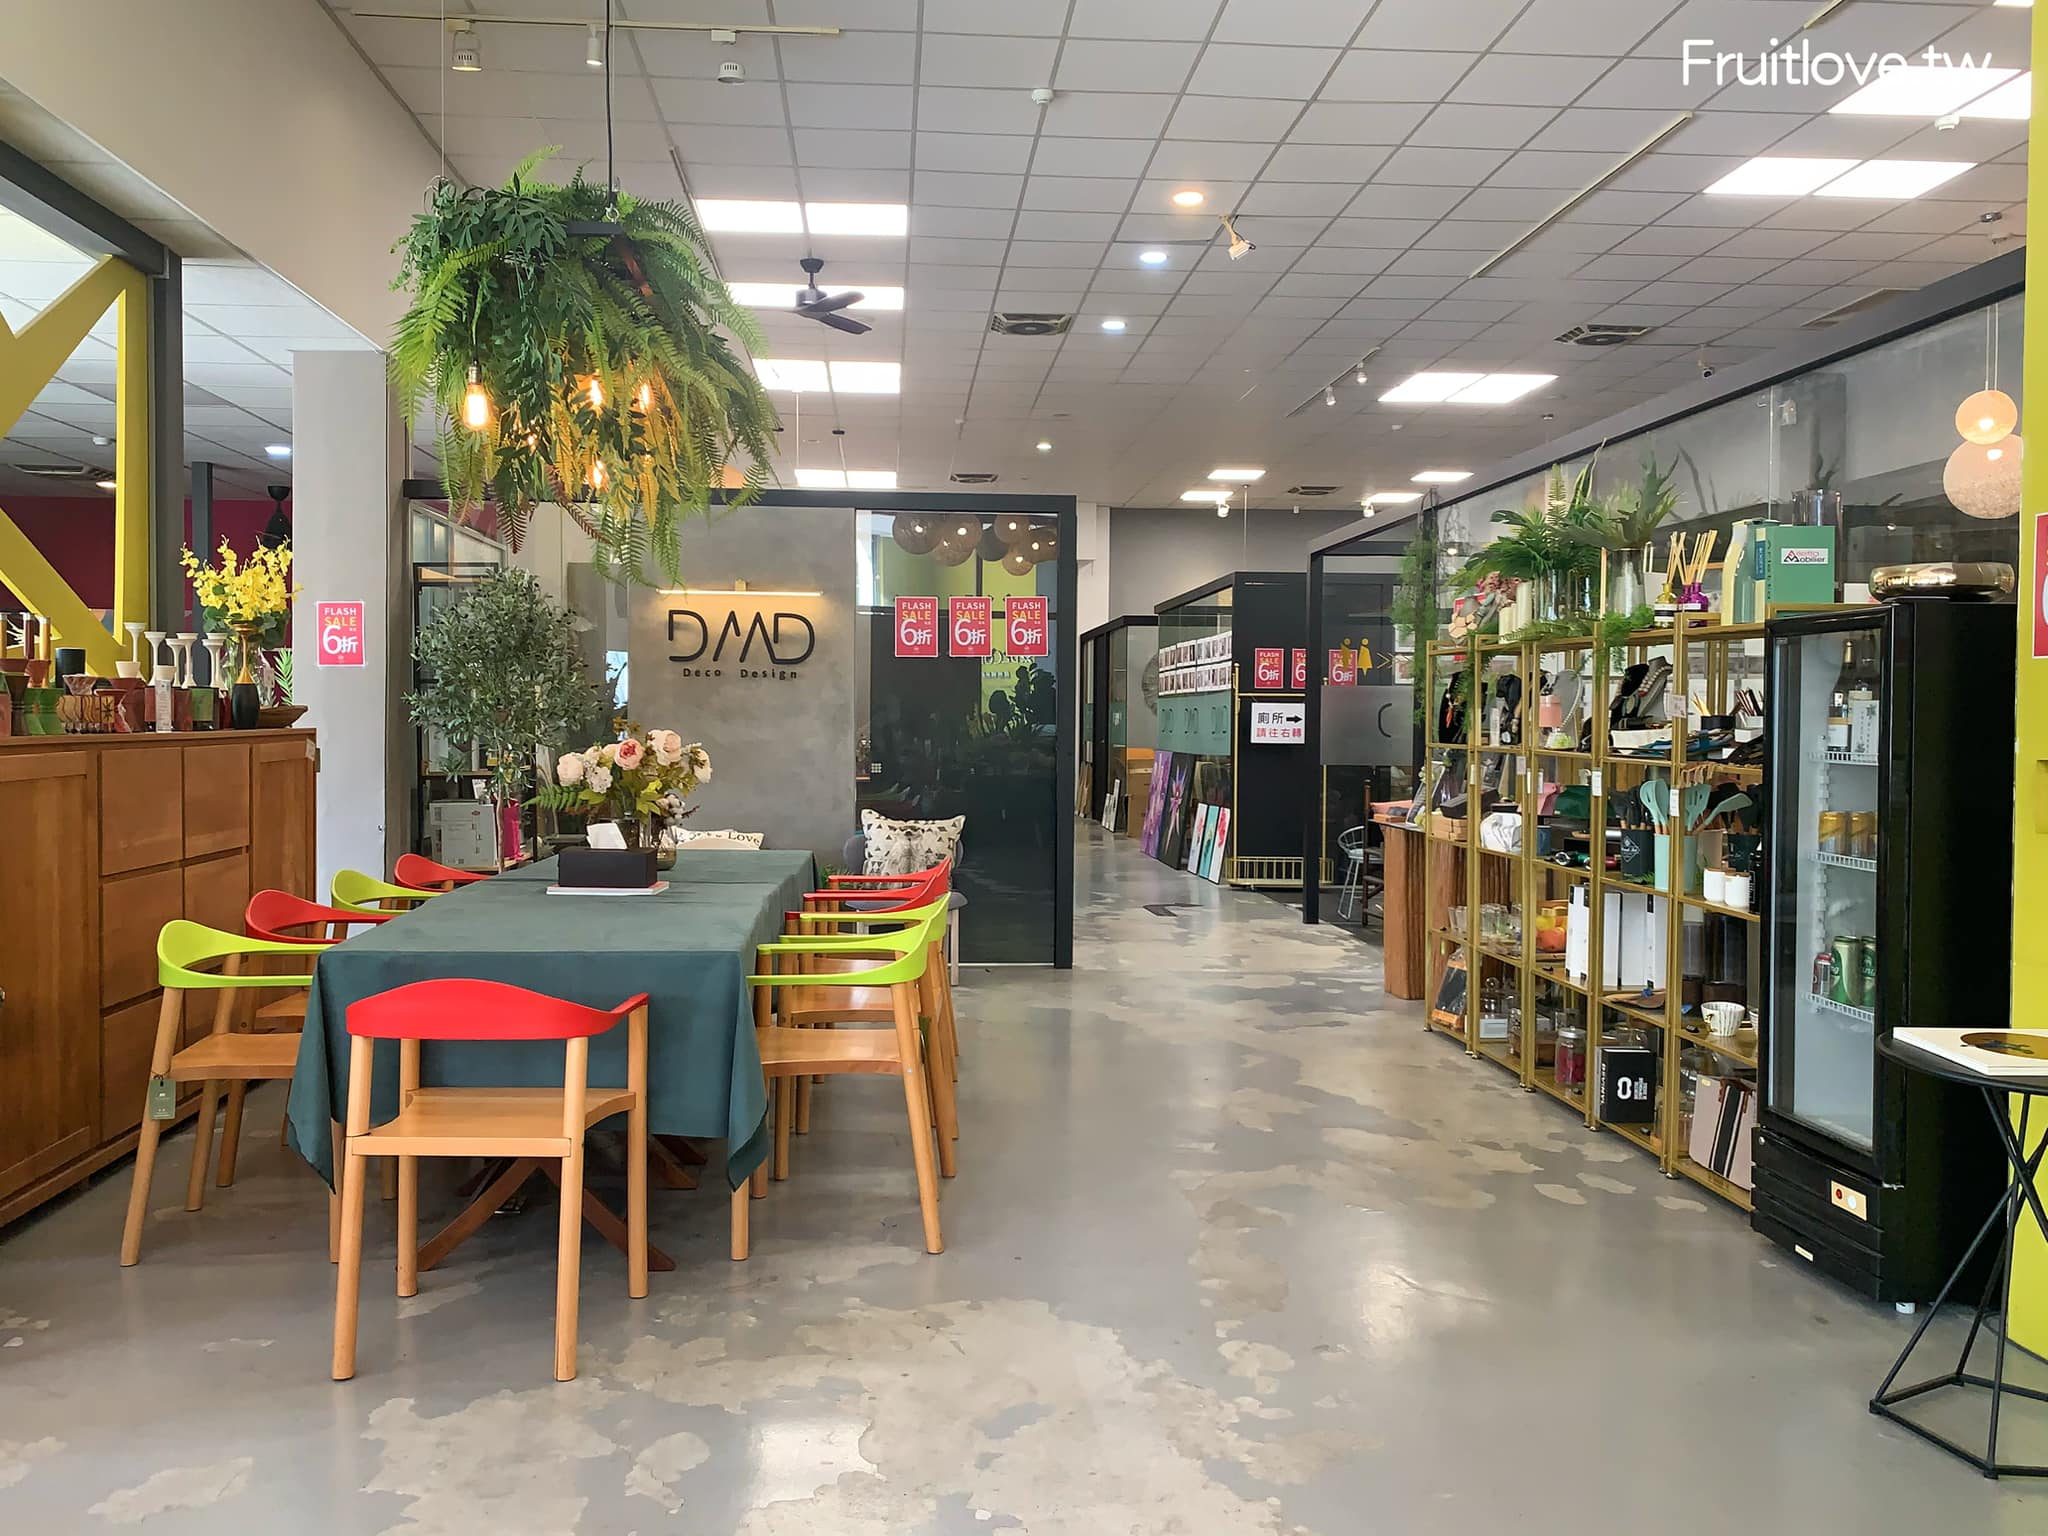 Rhino Cafe 犀牛咖啡⟩與室內設計結合的特色咖啡廳，內用消費不限時-台中南區美食/ 寵物友善咖啡廳 @果果愛Fruitlove